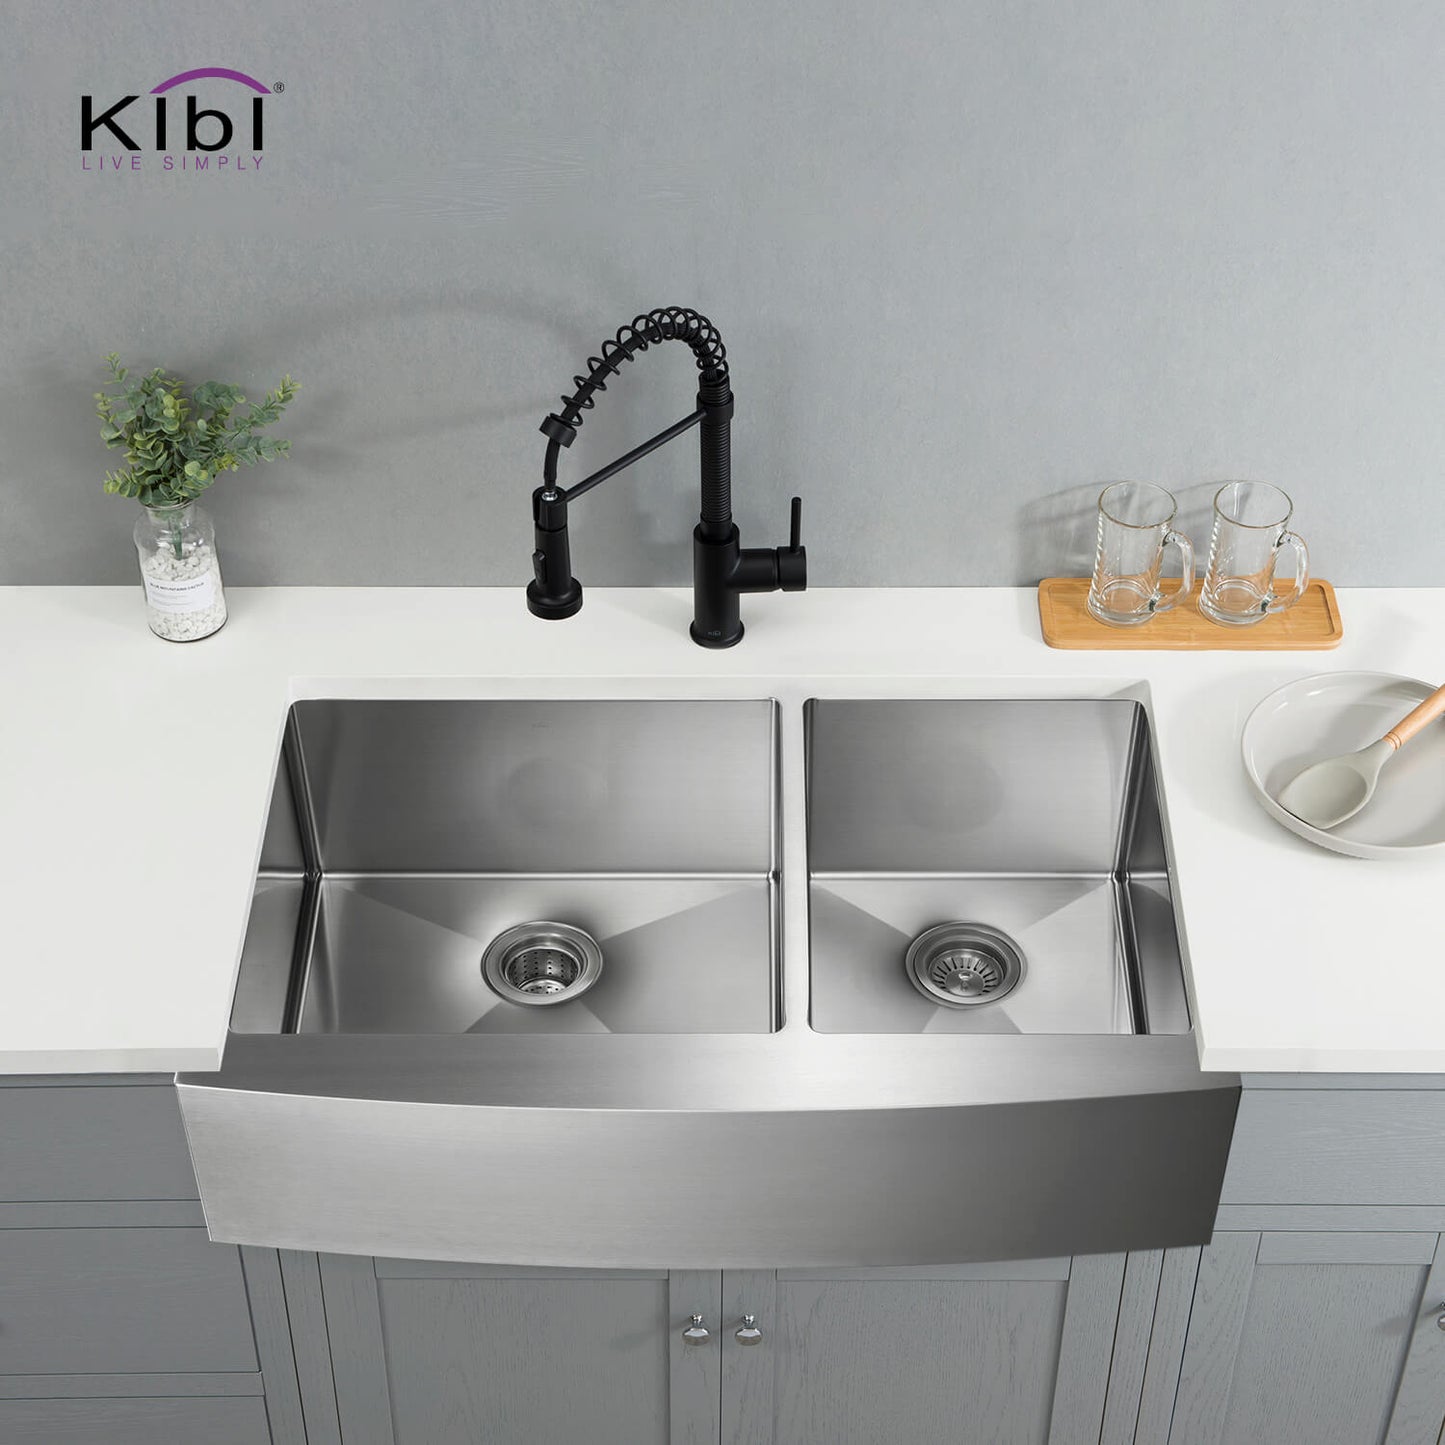 Kibi 36" x 22" x 10" Handcrafted Double Bowl Farmhouse Apron Kitchen Sink With Satin Finish